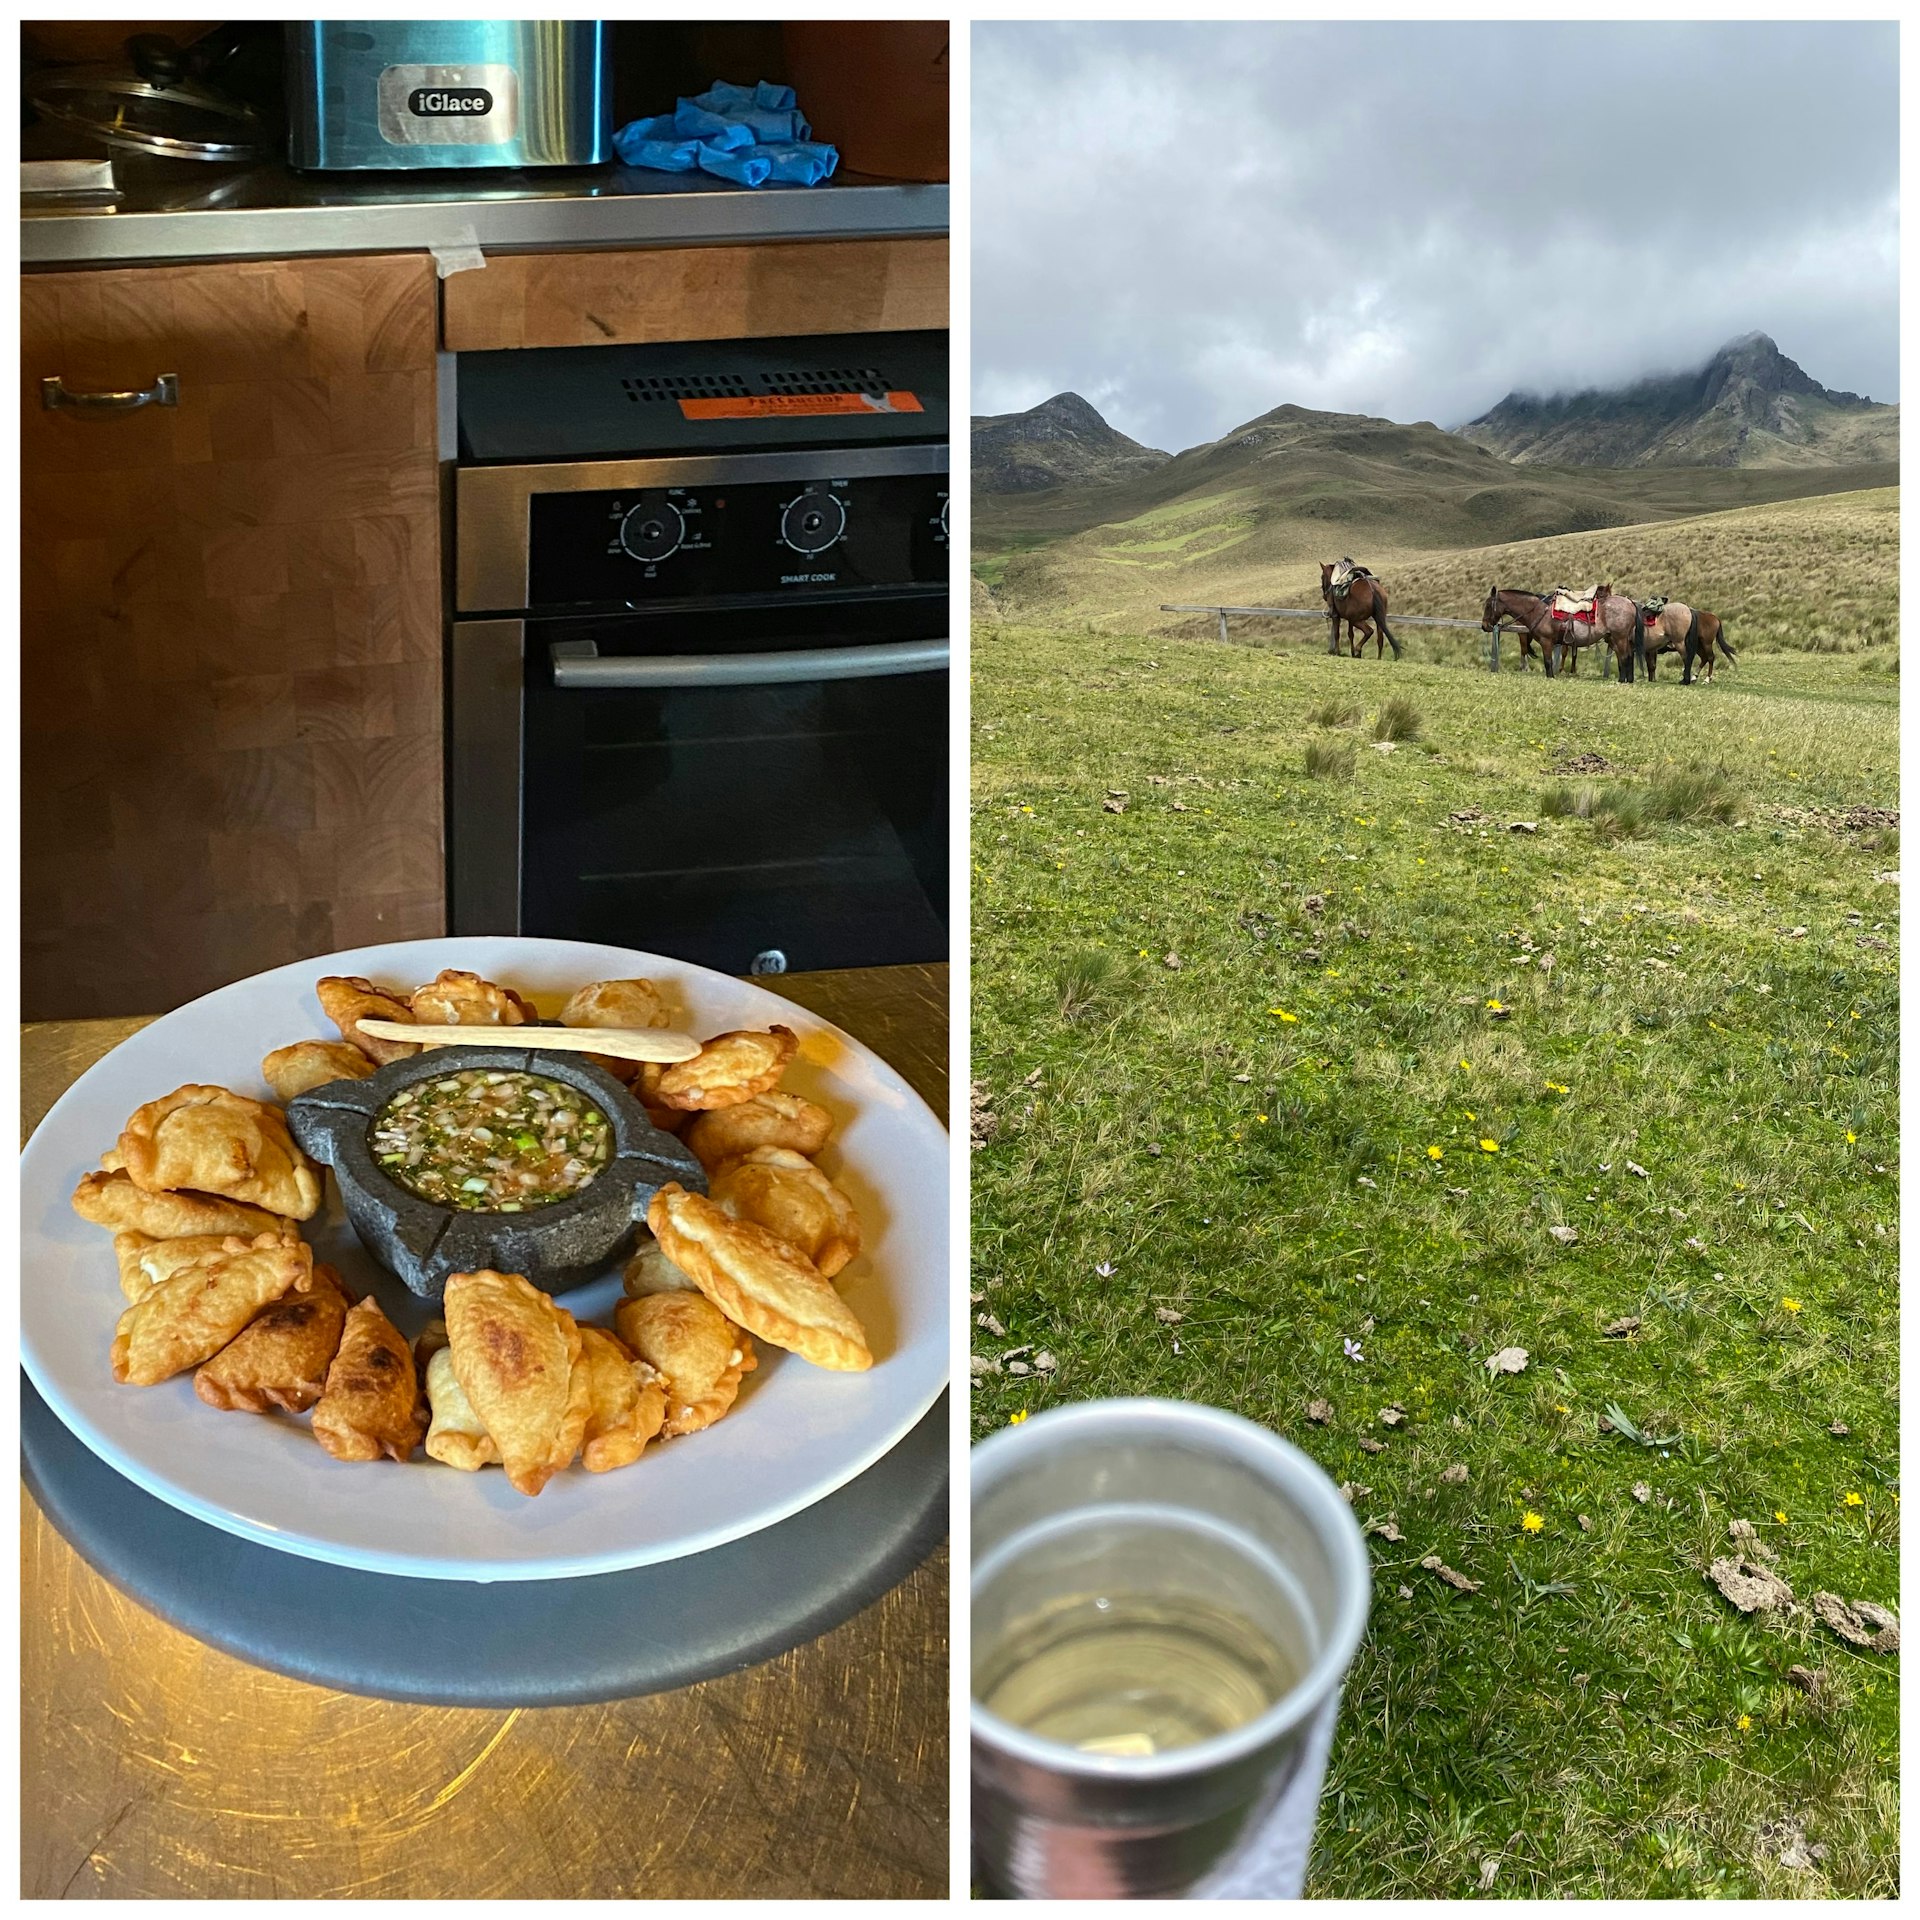 Left: a plate of homemade empanadas; right: a cup of tea drank on a horseback ride